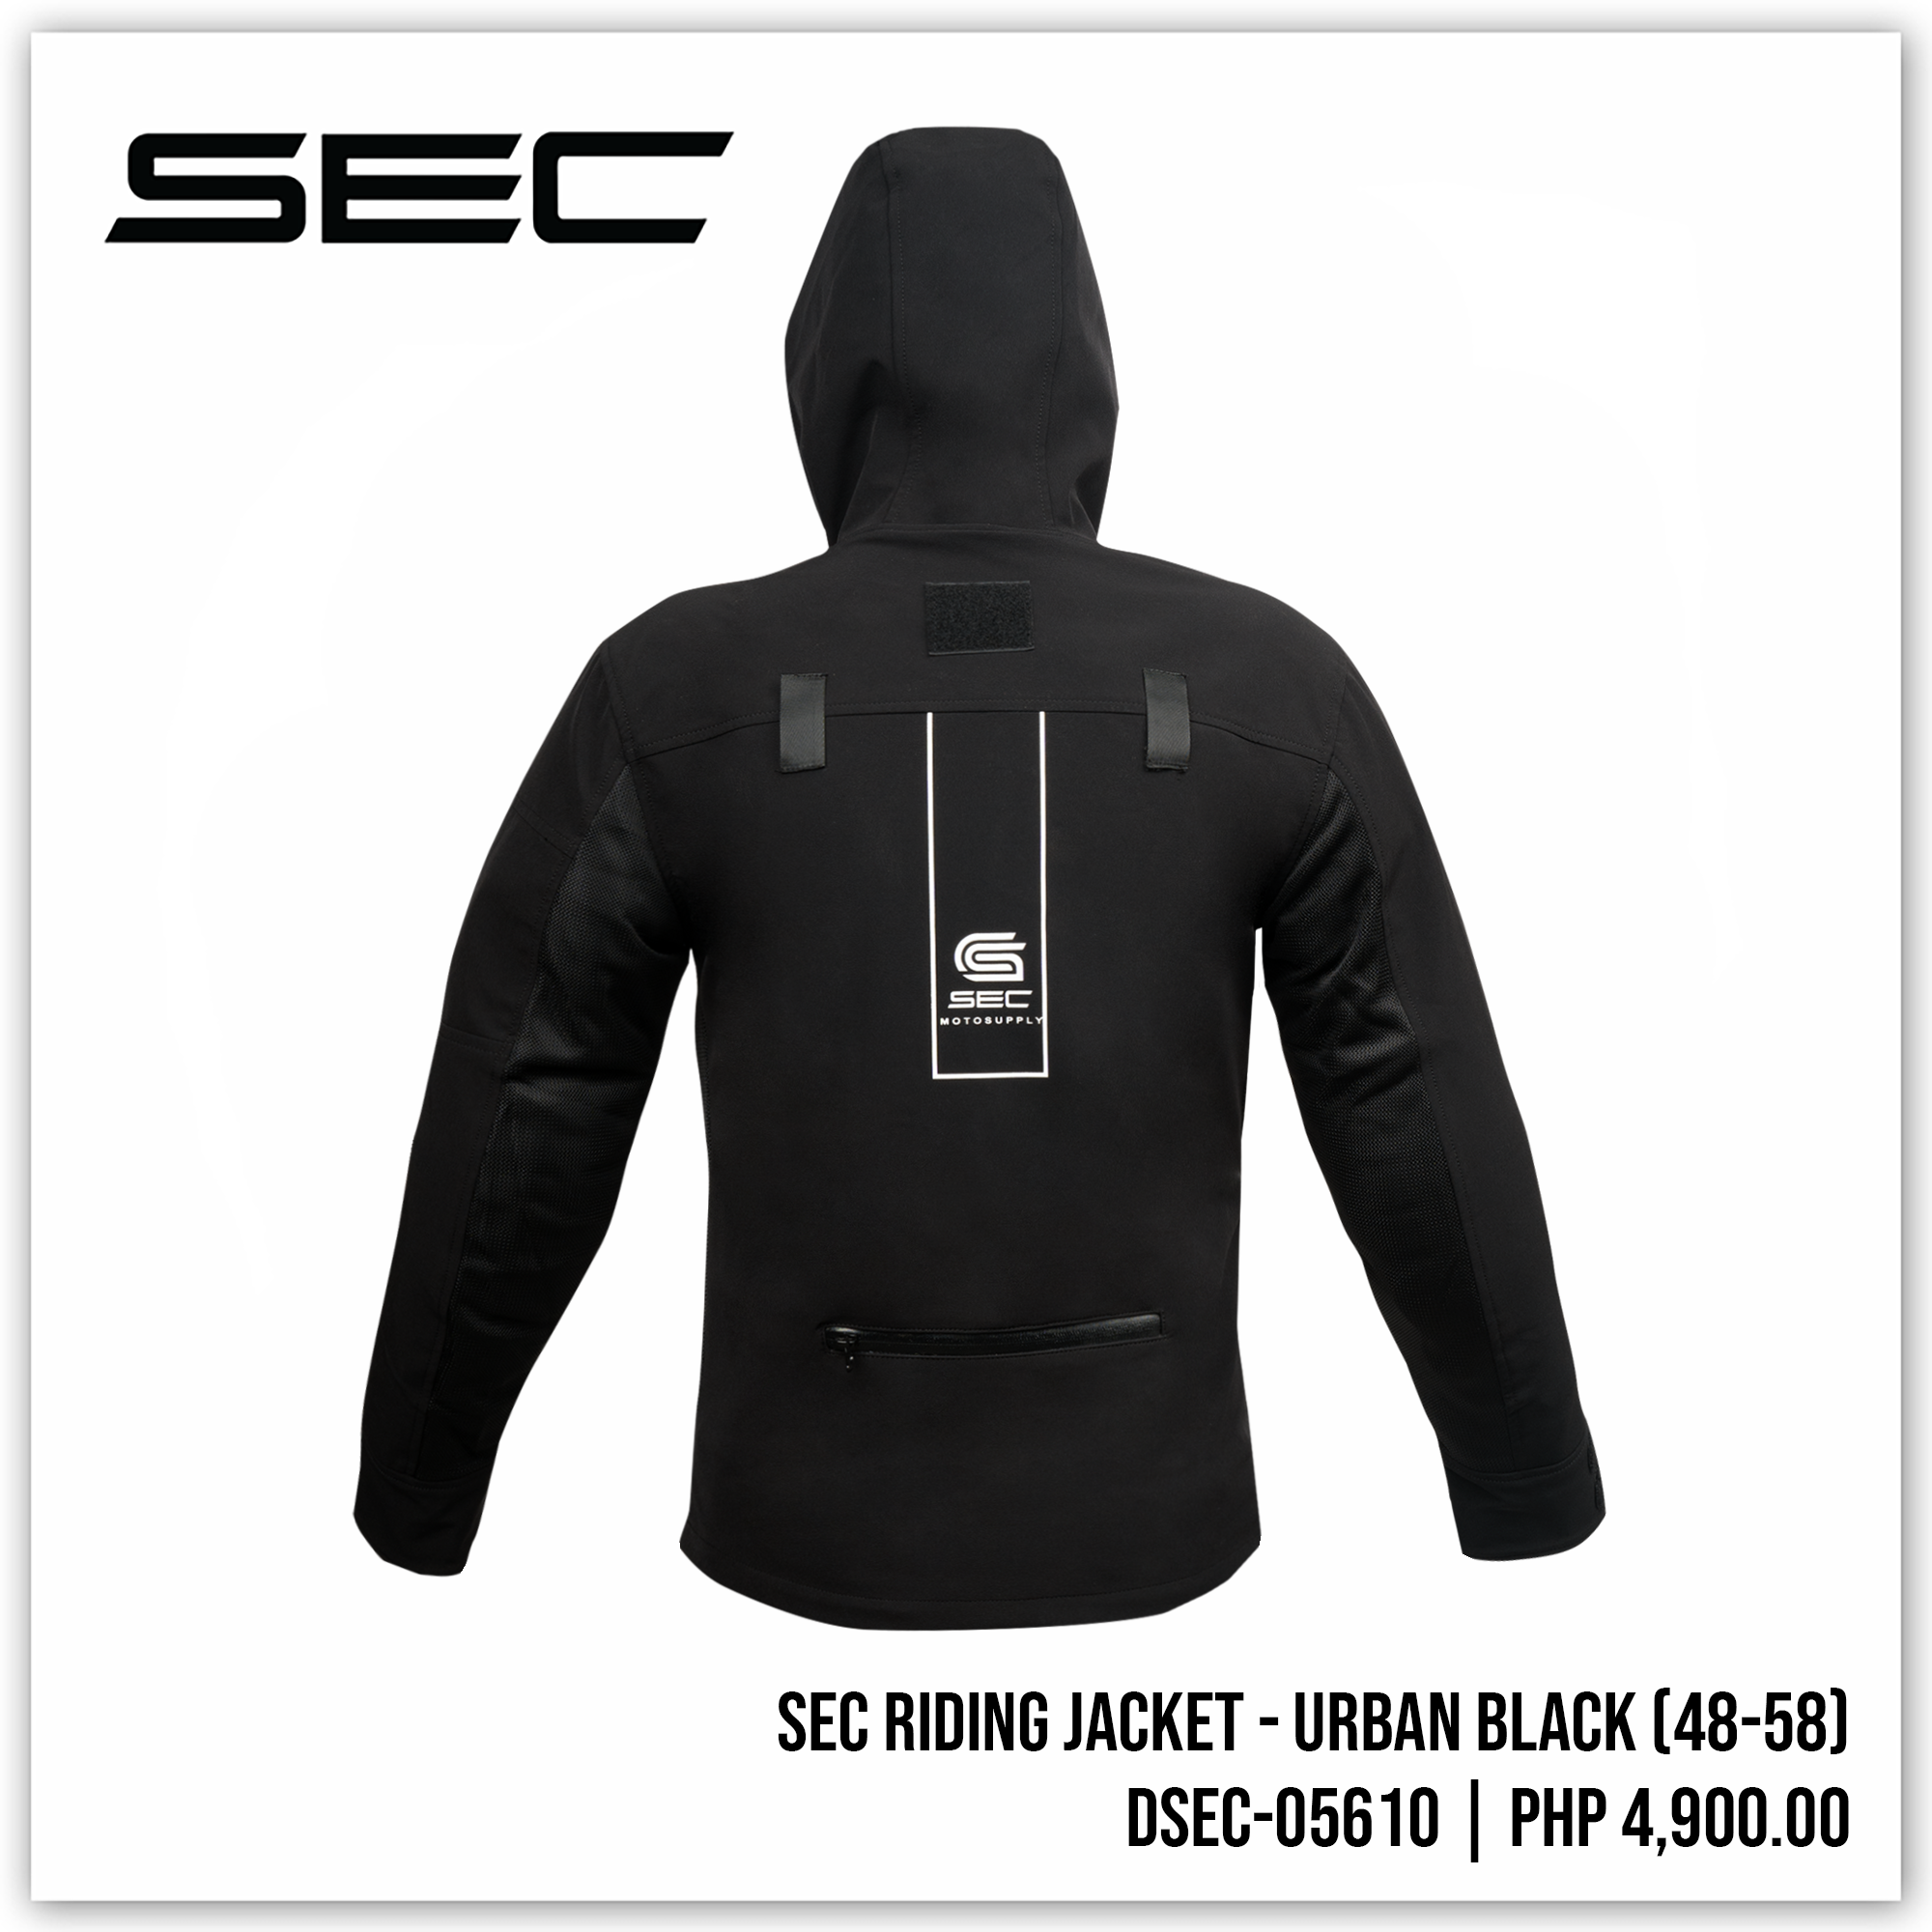 SEC Riding Jacket - Urban Black